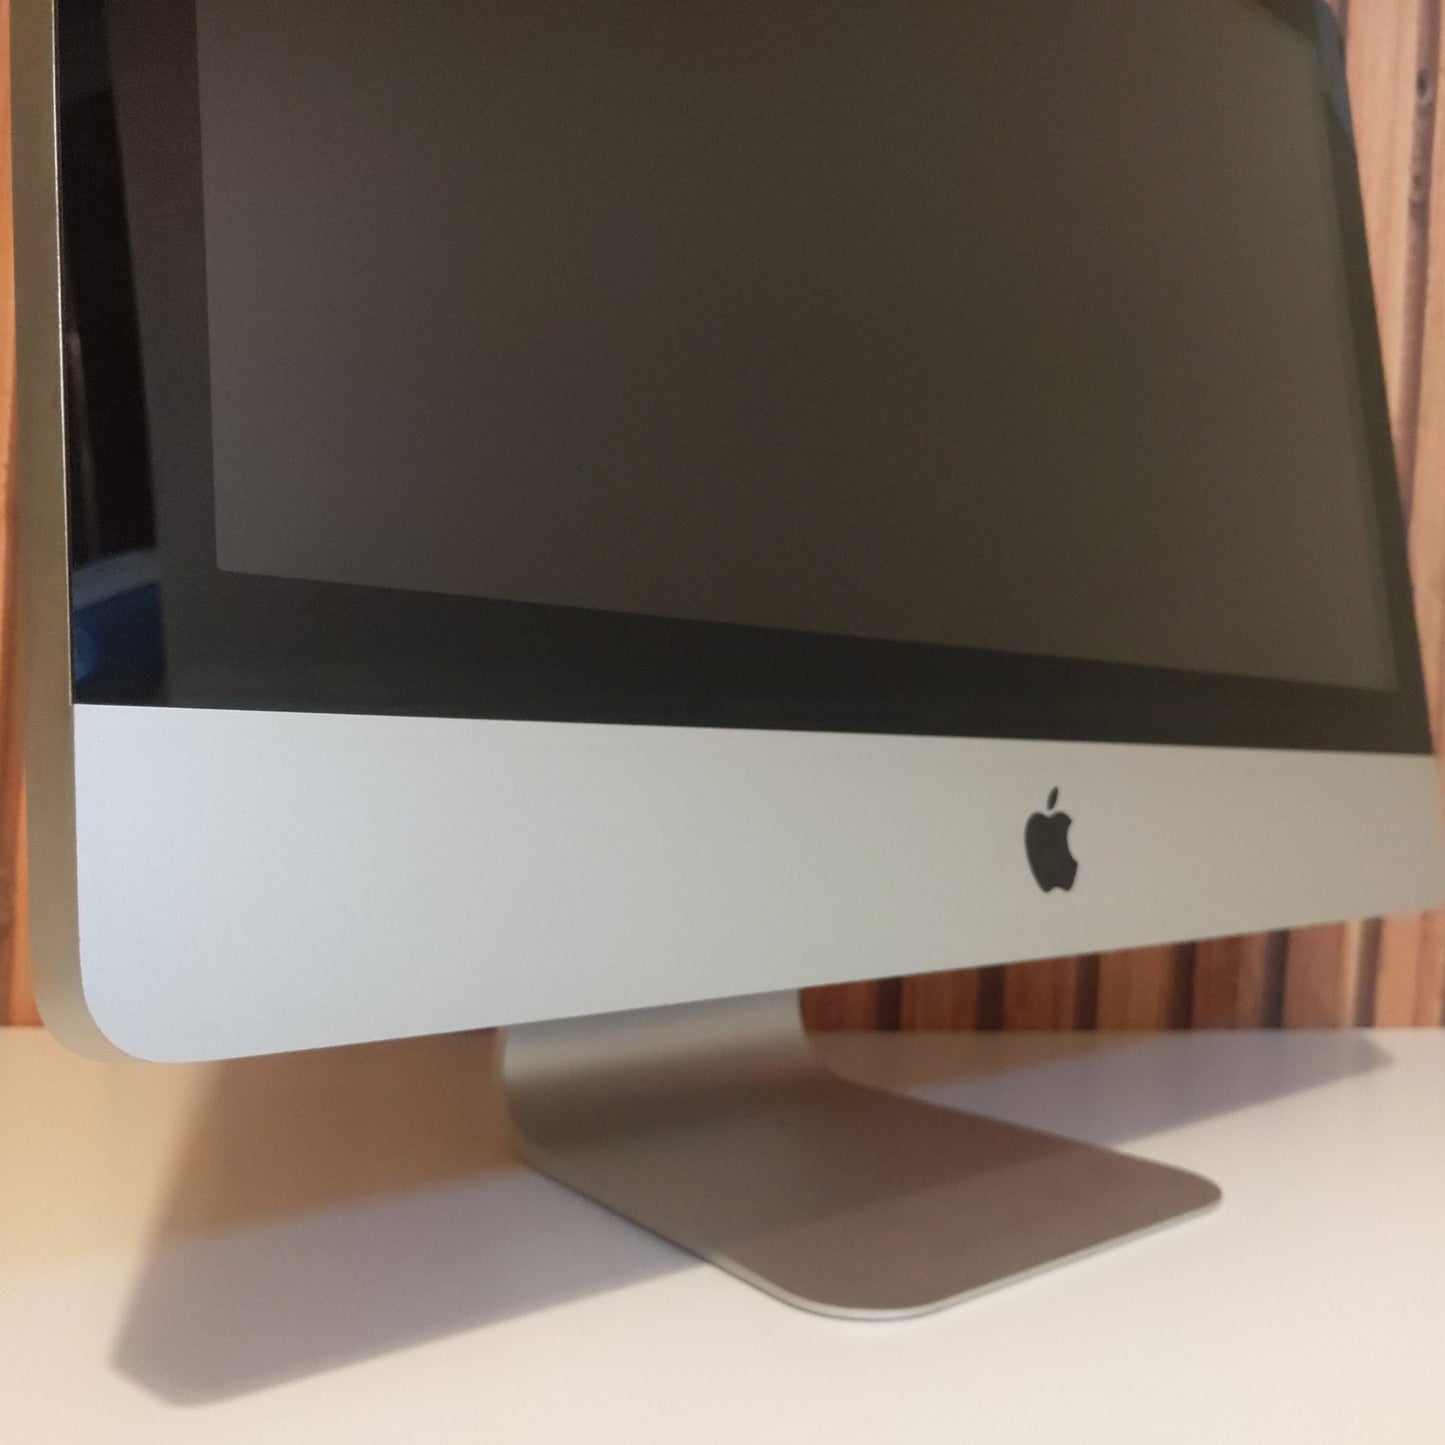 iMac 21.5" - Dual Core i3 | 256GB SSD